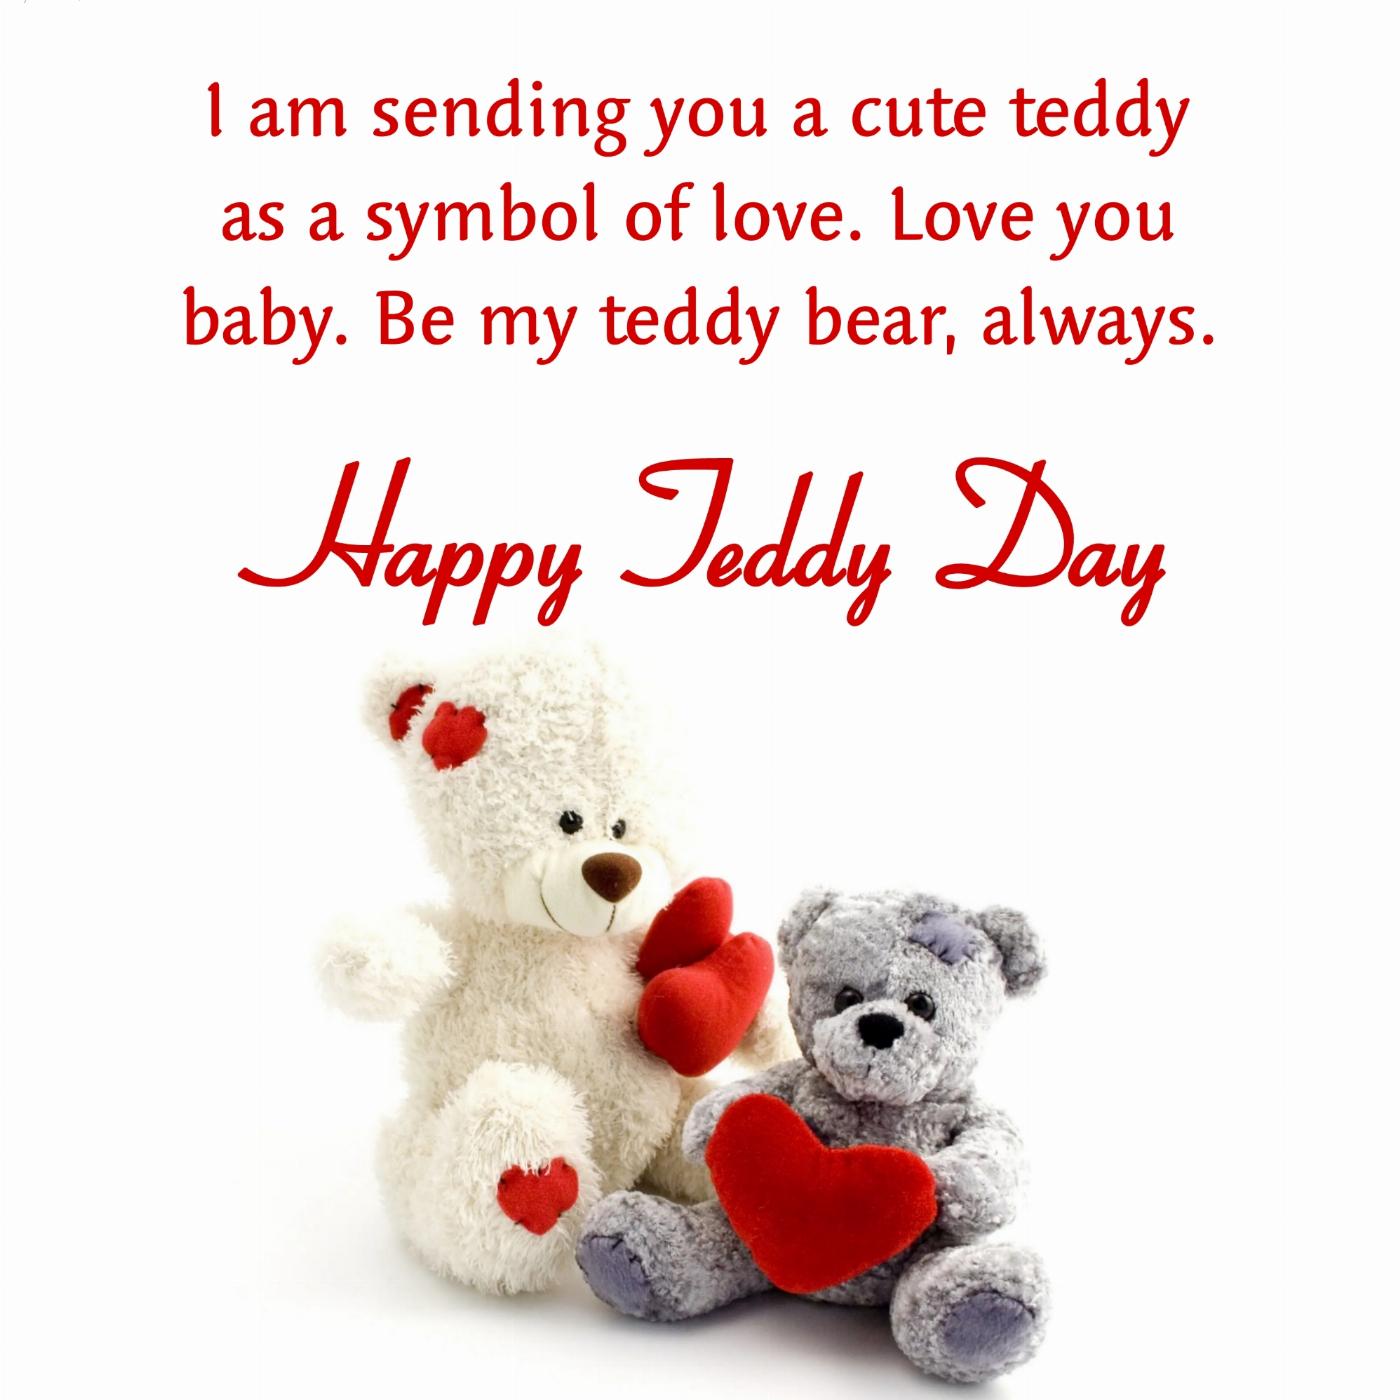 I am sending you a cute teddy as a symbol of love